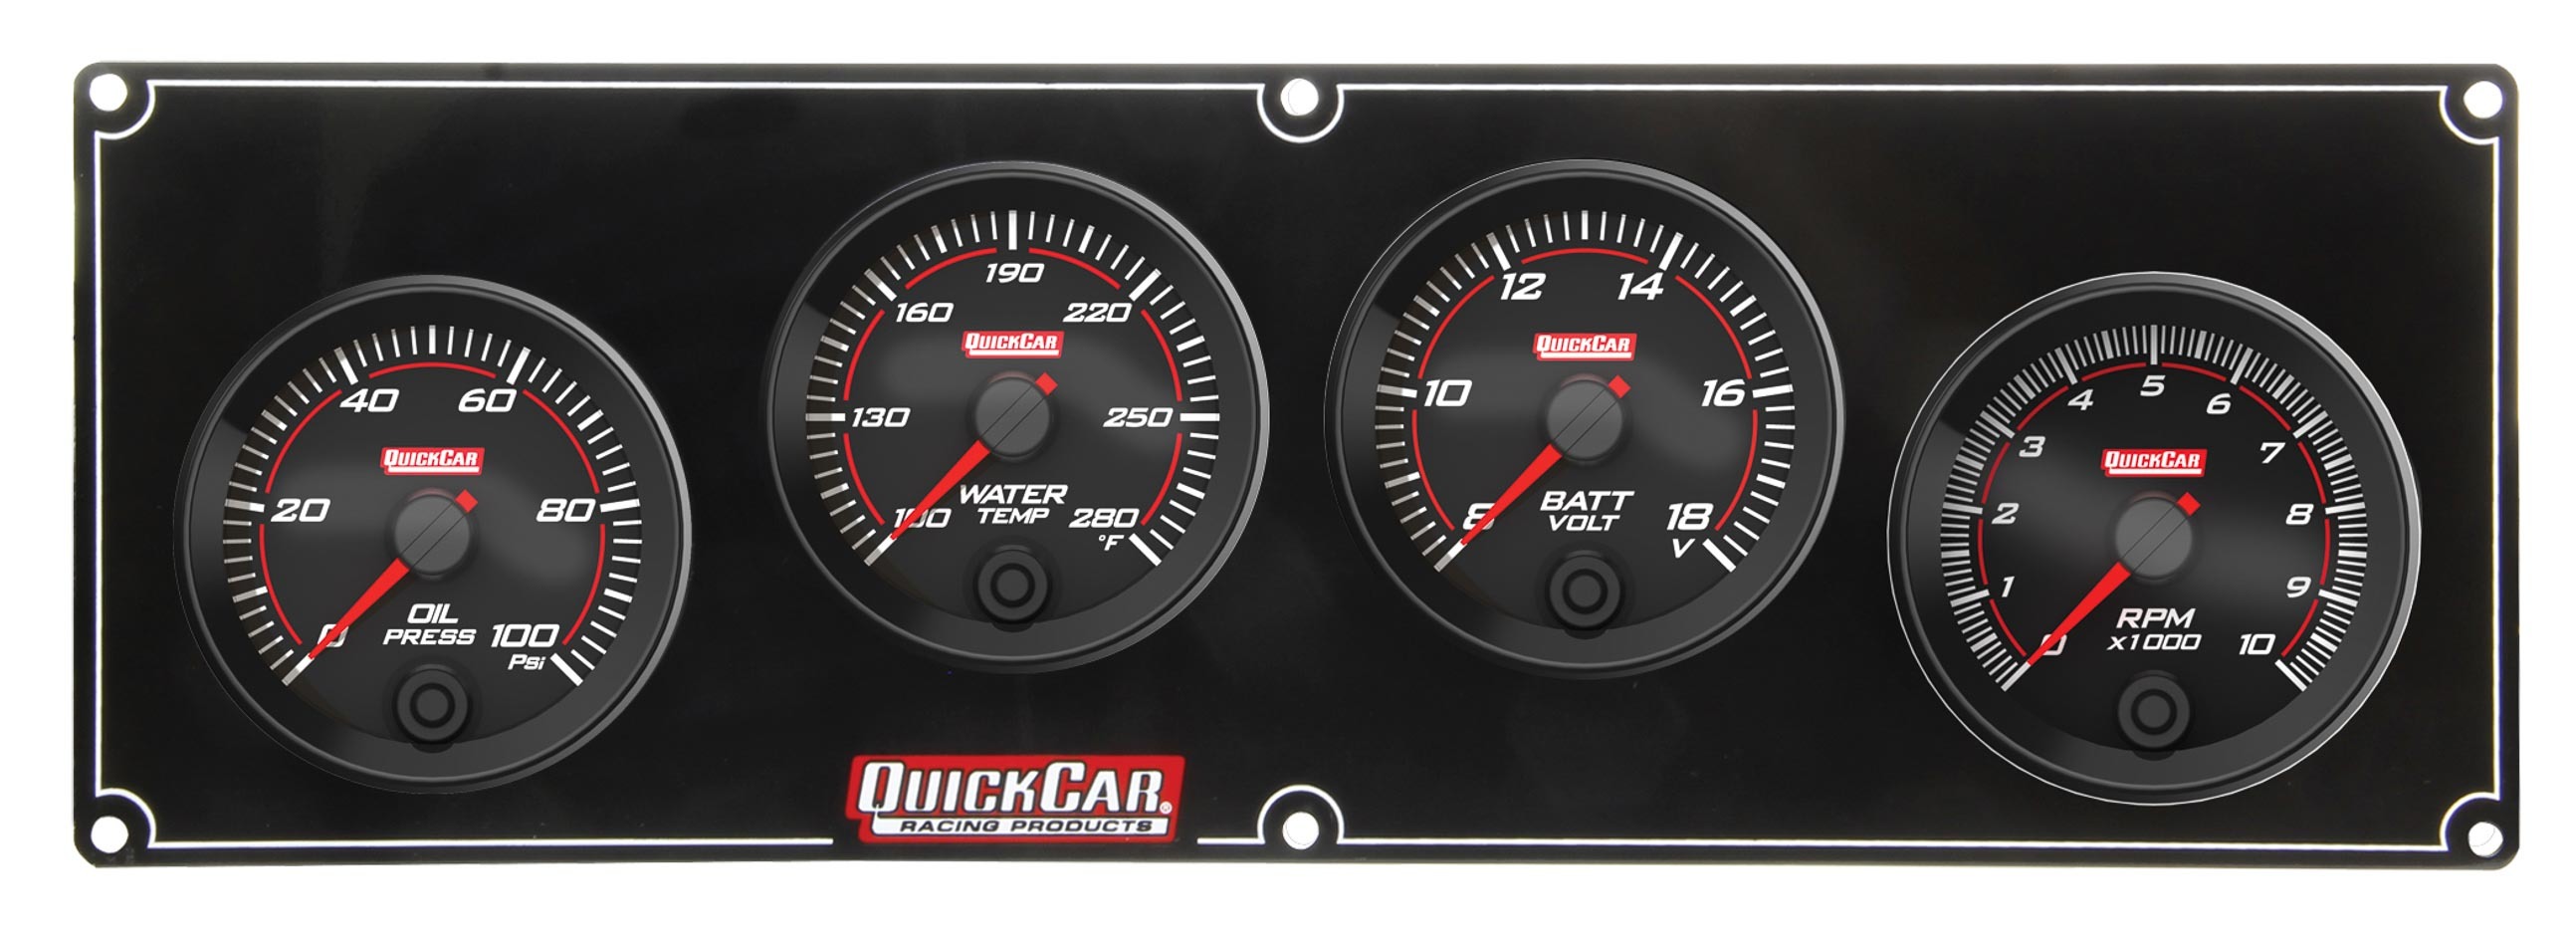 QuickCar 69-3247 - Gauge Panel Assembly, Redline, Oil Pressure / Water Temperature / Volt / 2-5/8 in Tachometer, Black Face, Kit